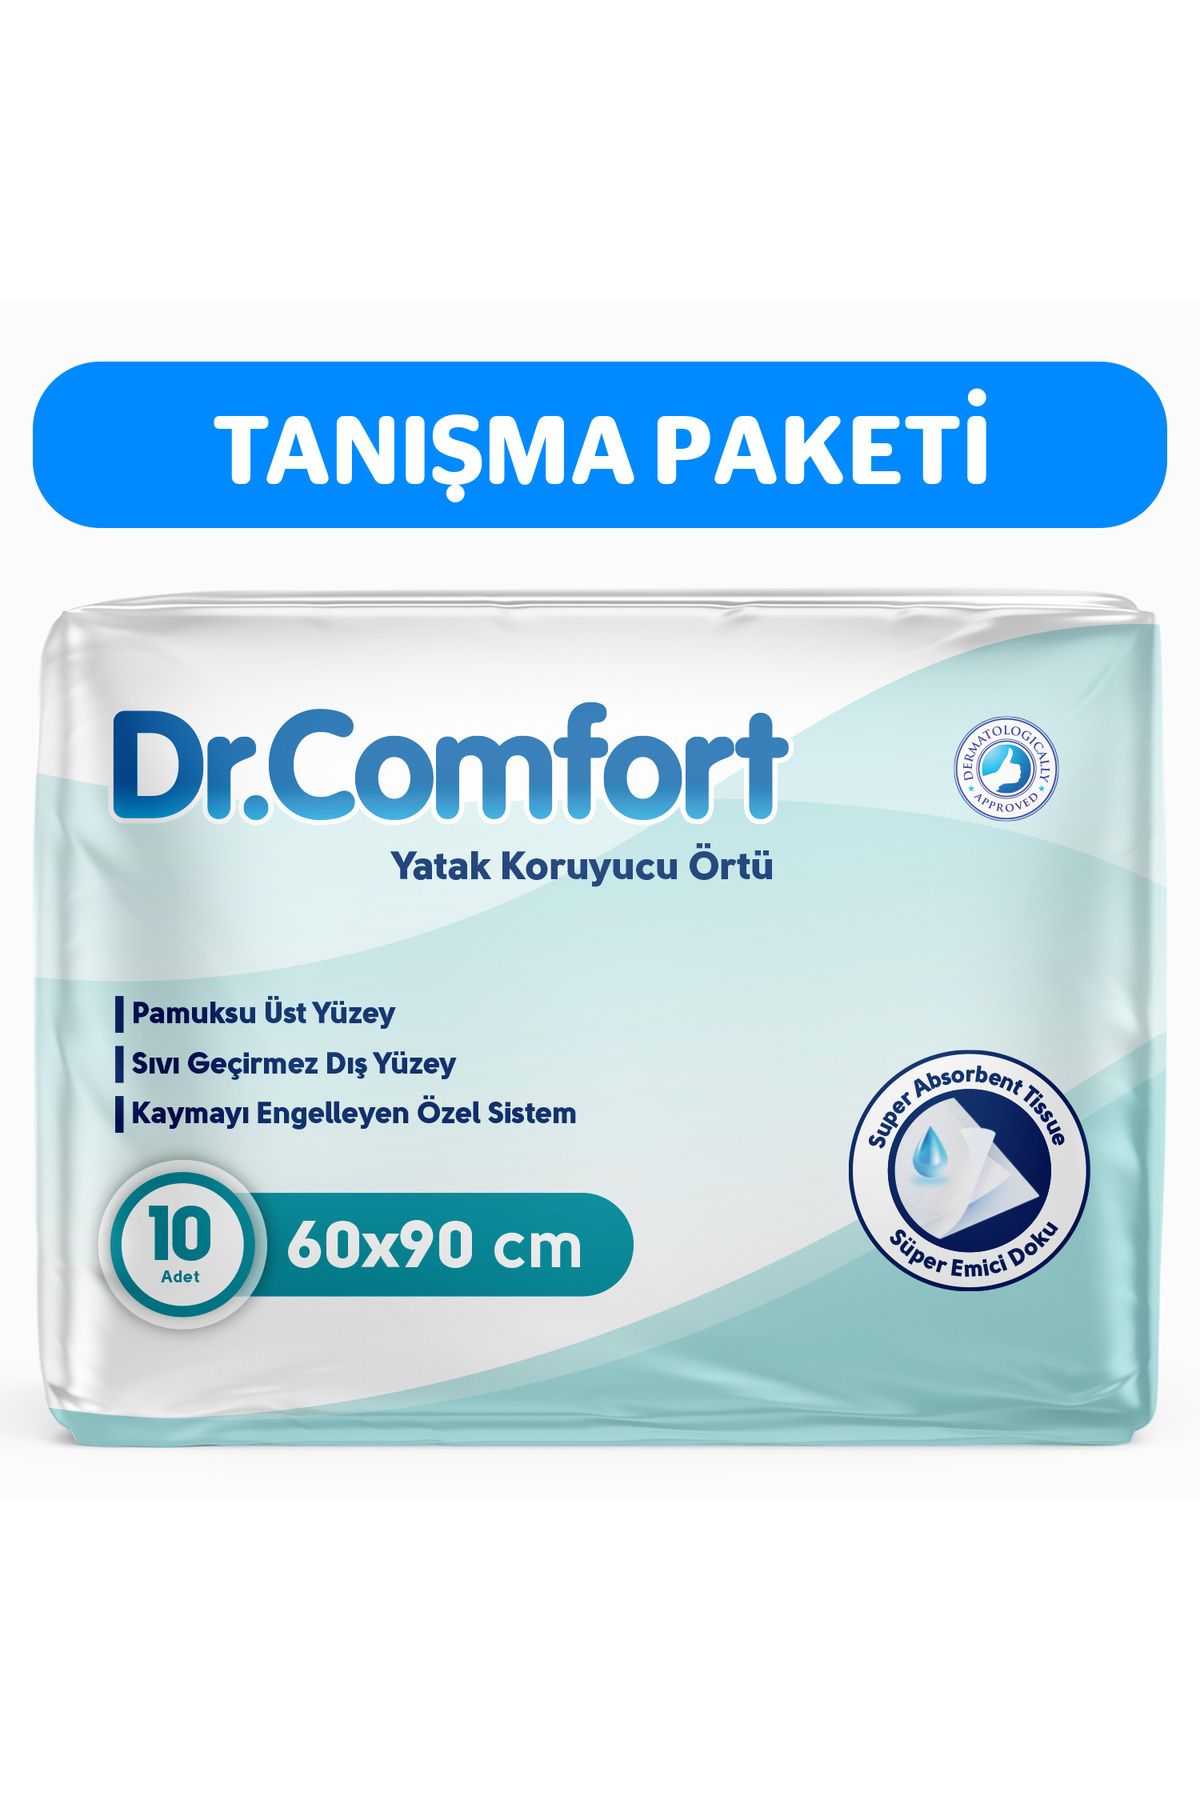 Dr.Comfort Dr Comfort 60x90 Yatak Koruyucu Örtü 10 Adet